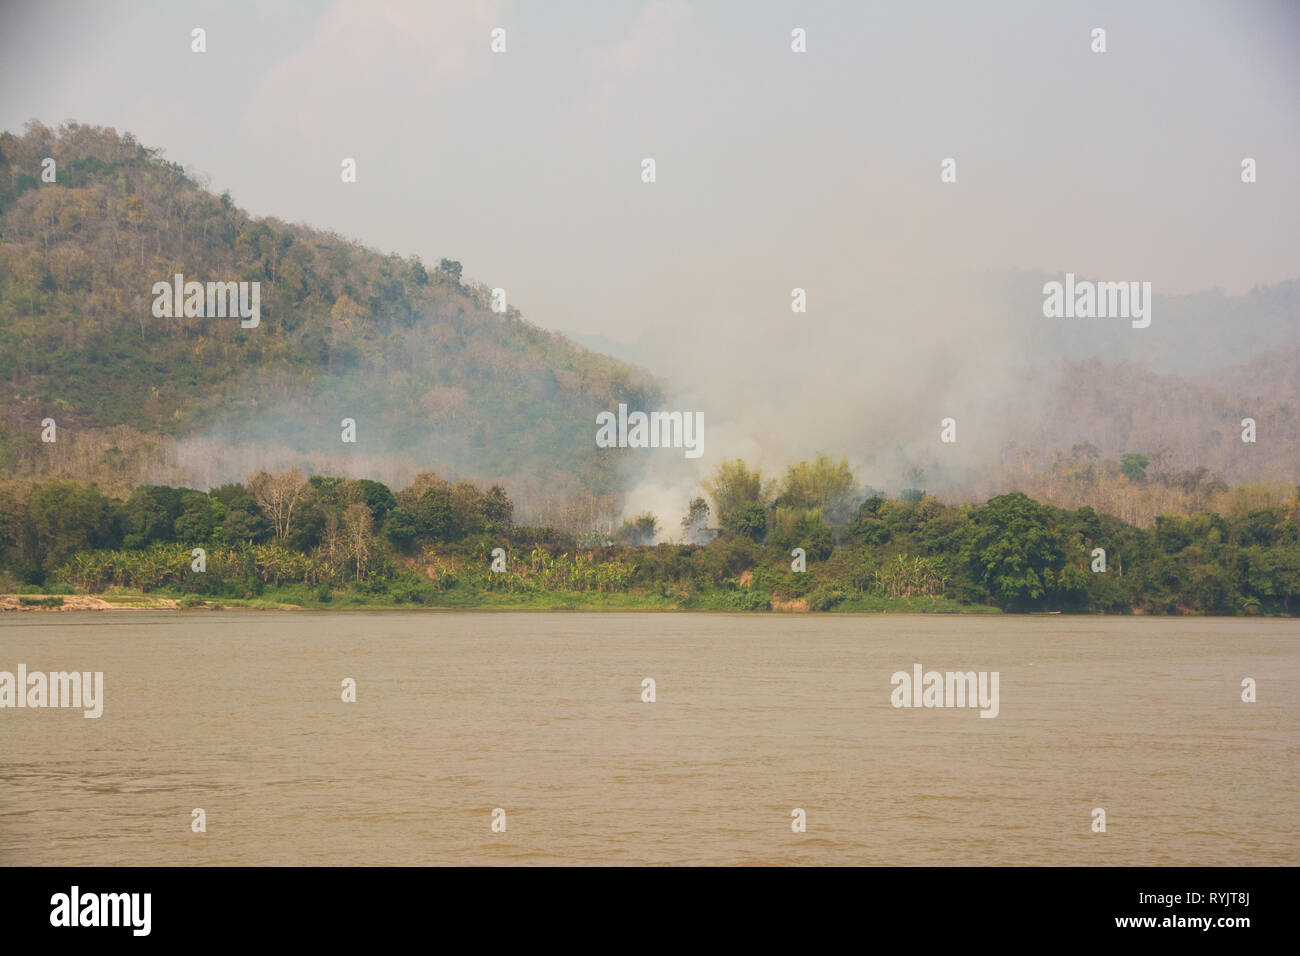 Lost in Haze - Burning Season in Laos Stock Photo